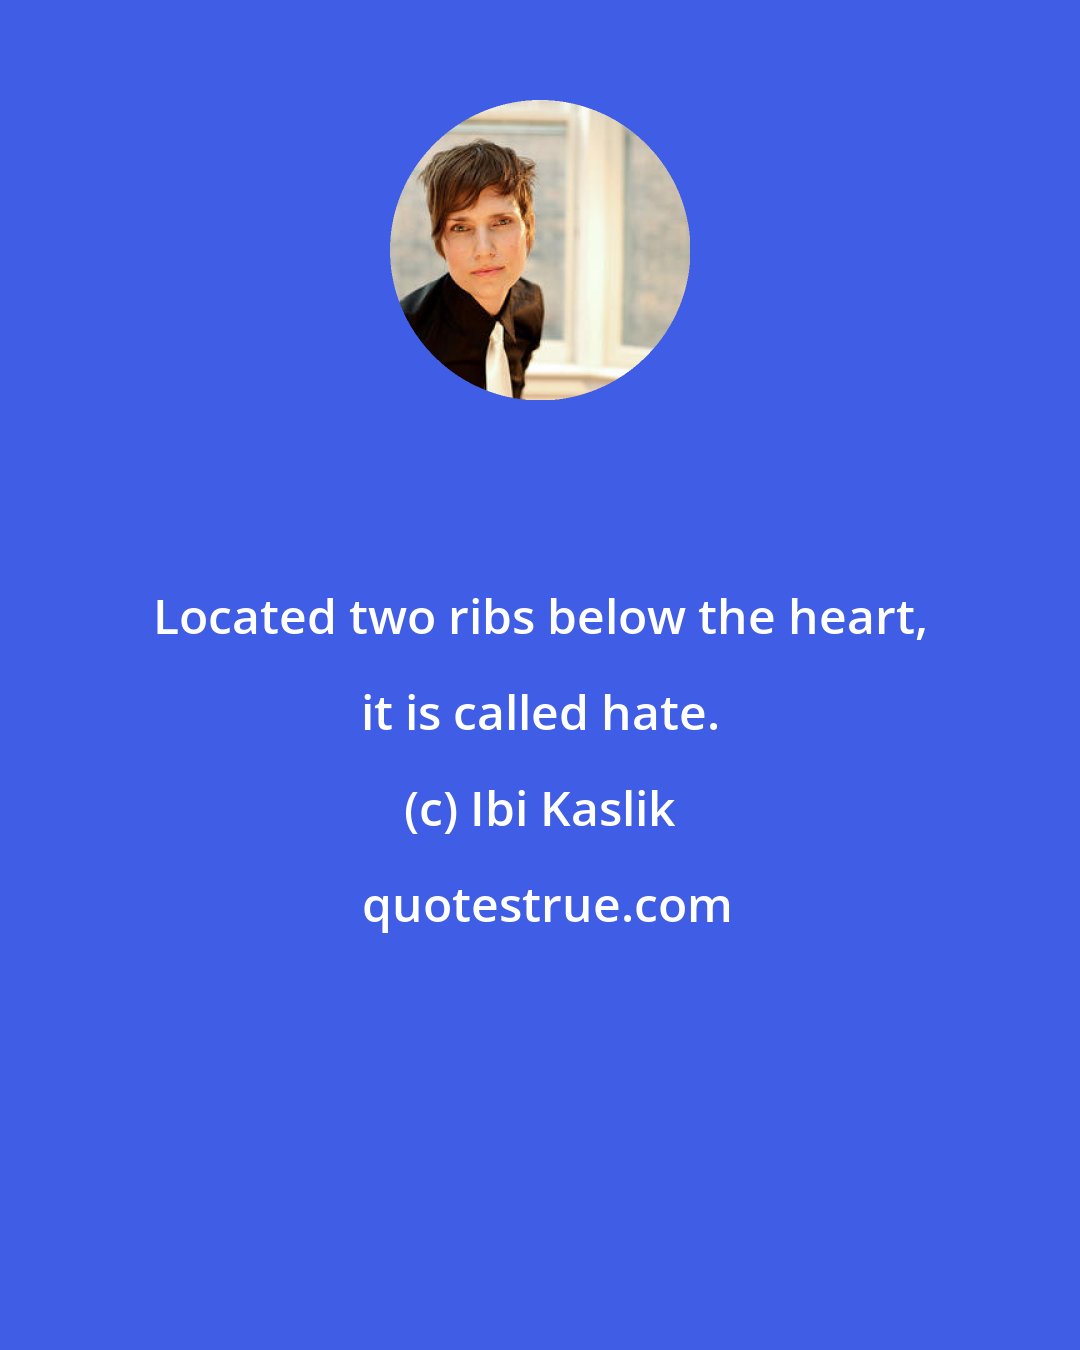 Ibi Kaslik: Located two ribs below the heart, it is called hate.